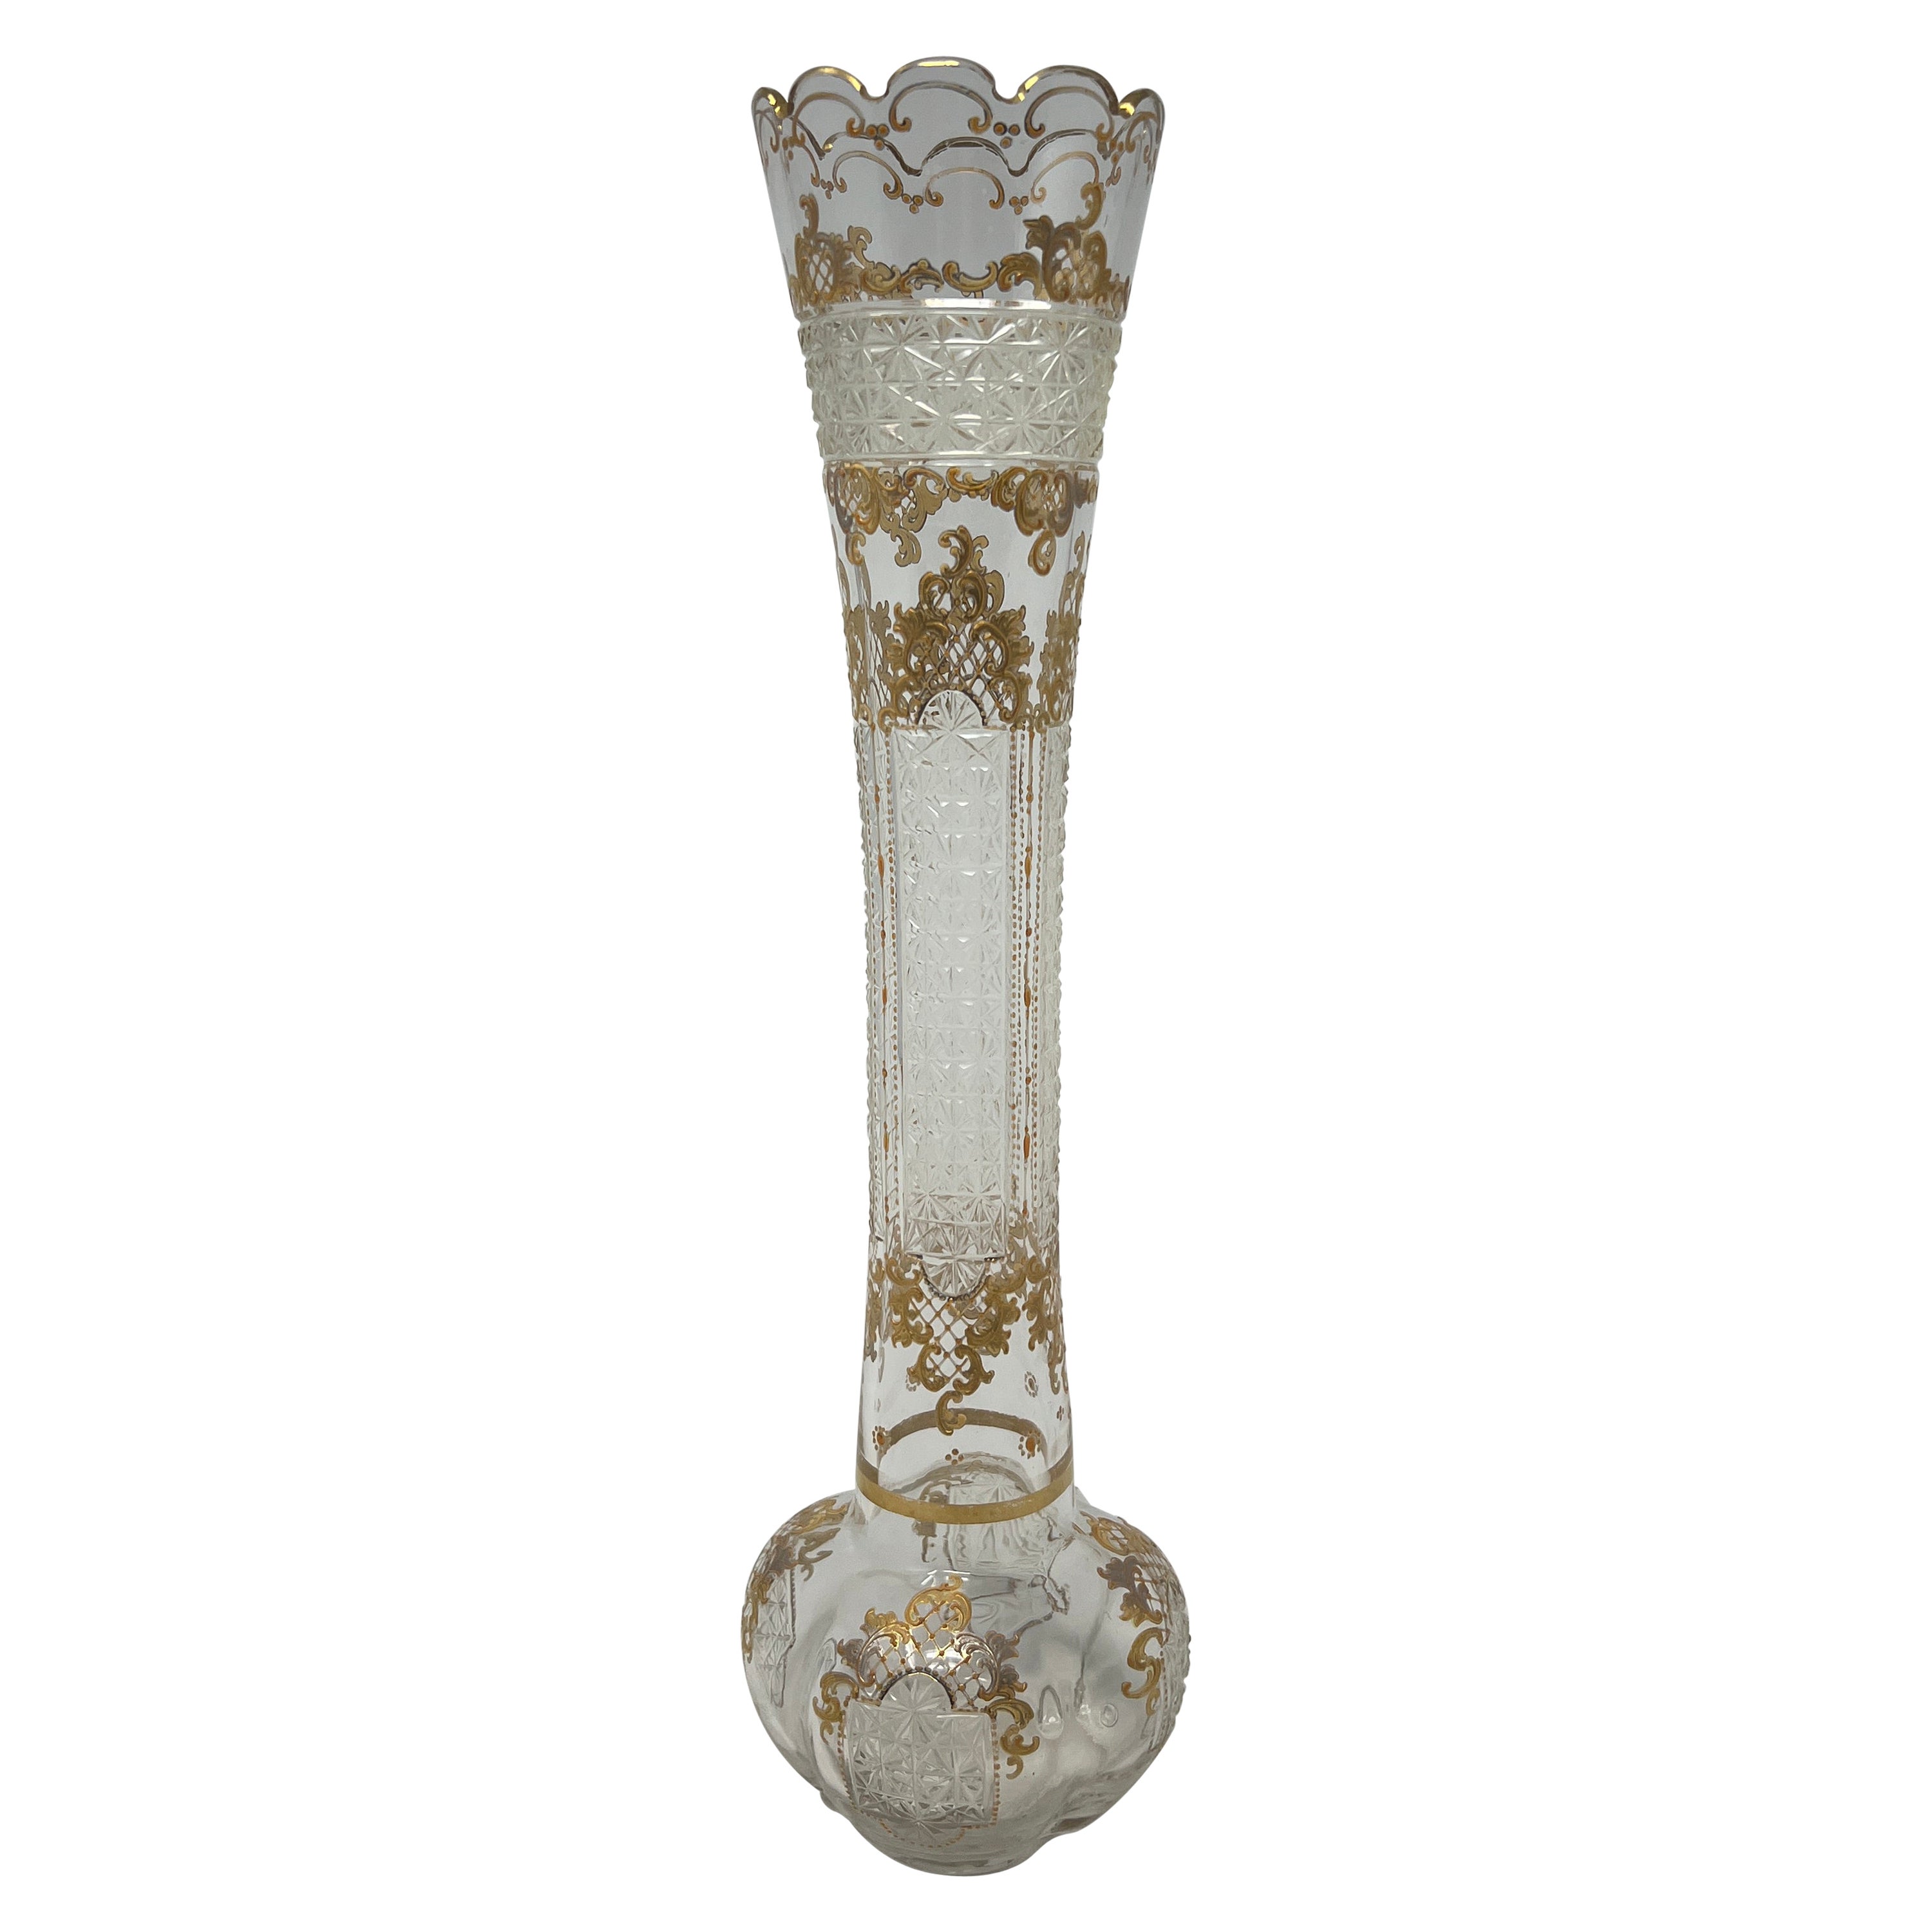 Antique German Moser Cut Glass Bud Vase with Gold Leaf Details, Circa 1880's. For Sale